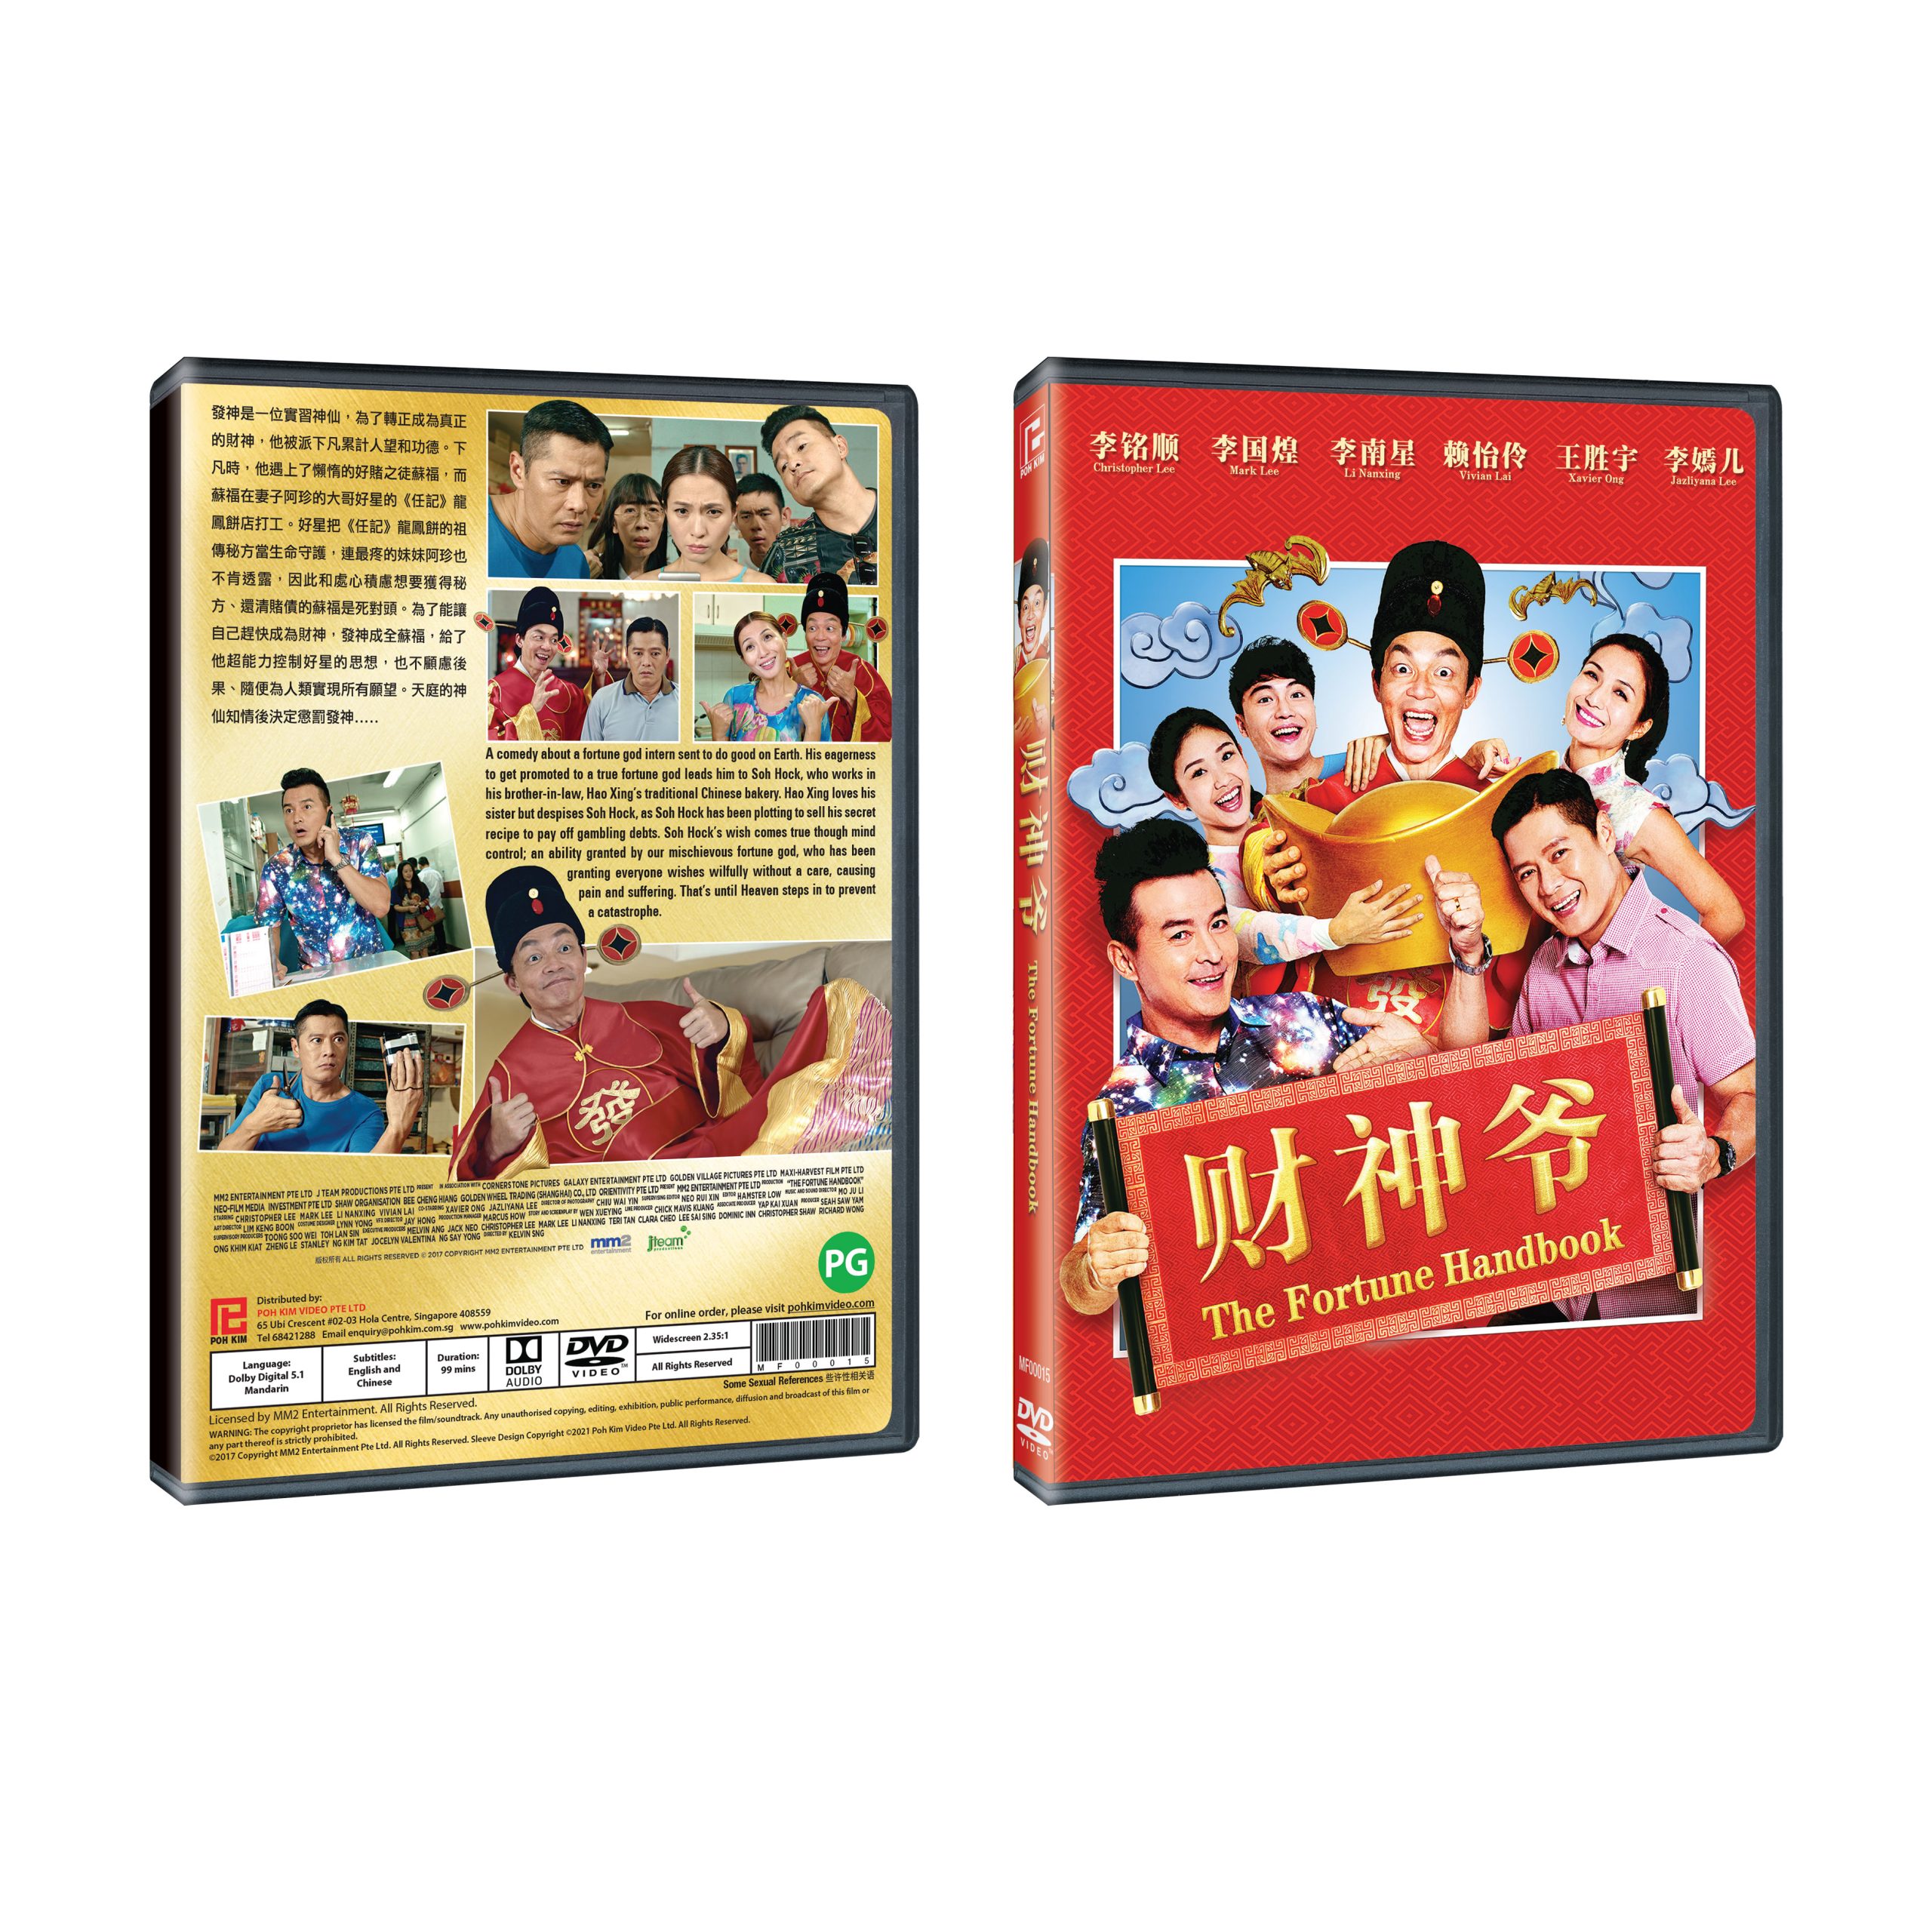 The Fortune Handbook 财神爷(Singapore Movie DVD) - Poh Kim Video